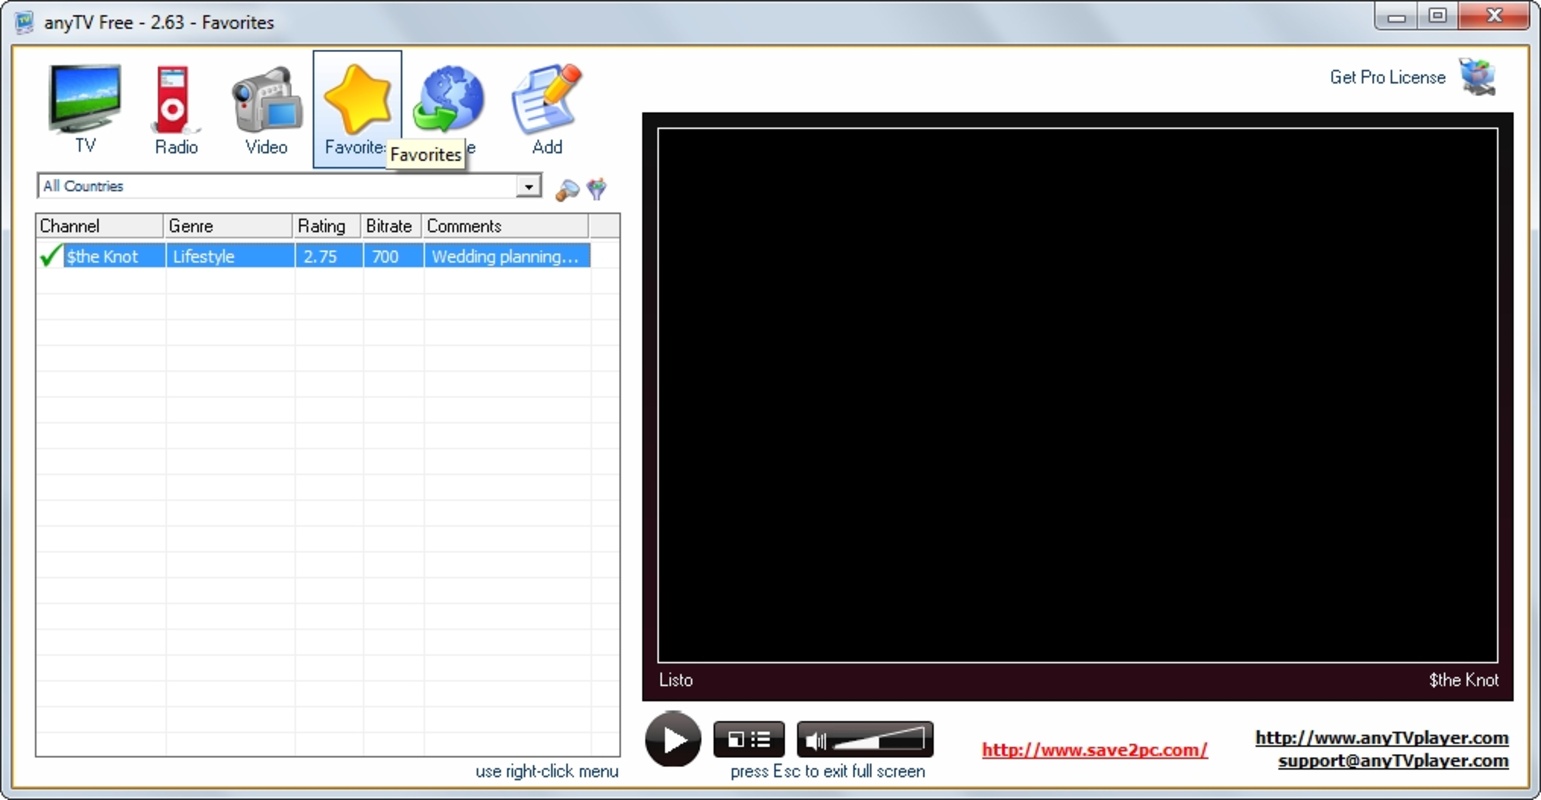 anyTV Free 2.63 for Windows Screenshot 1